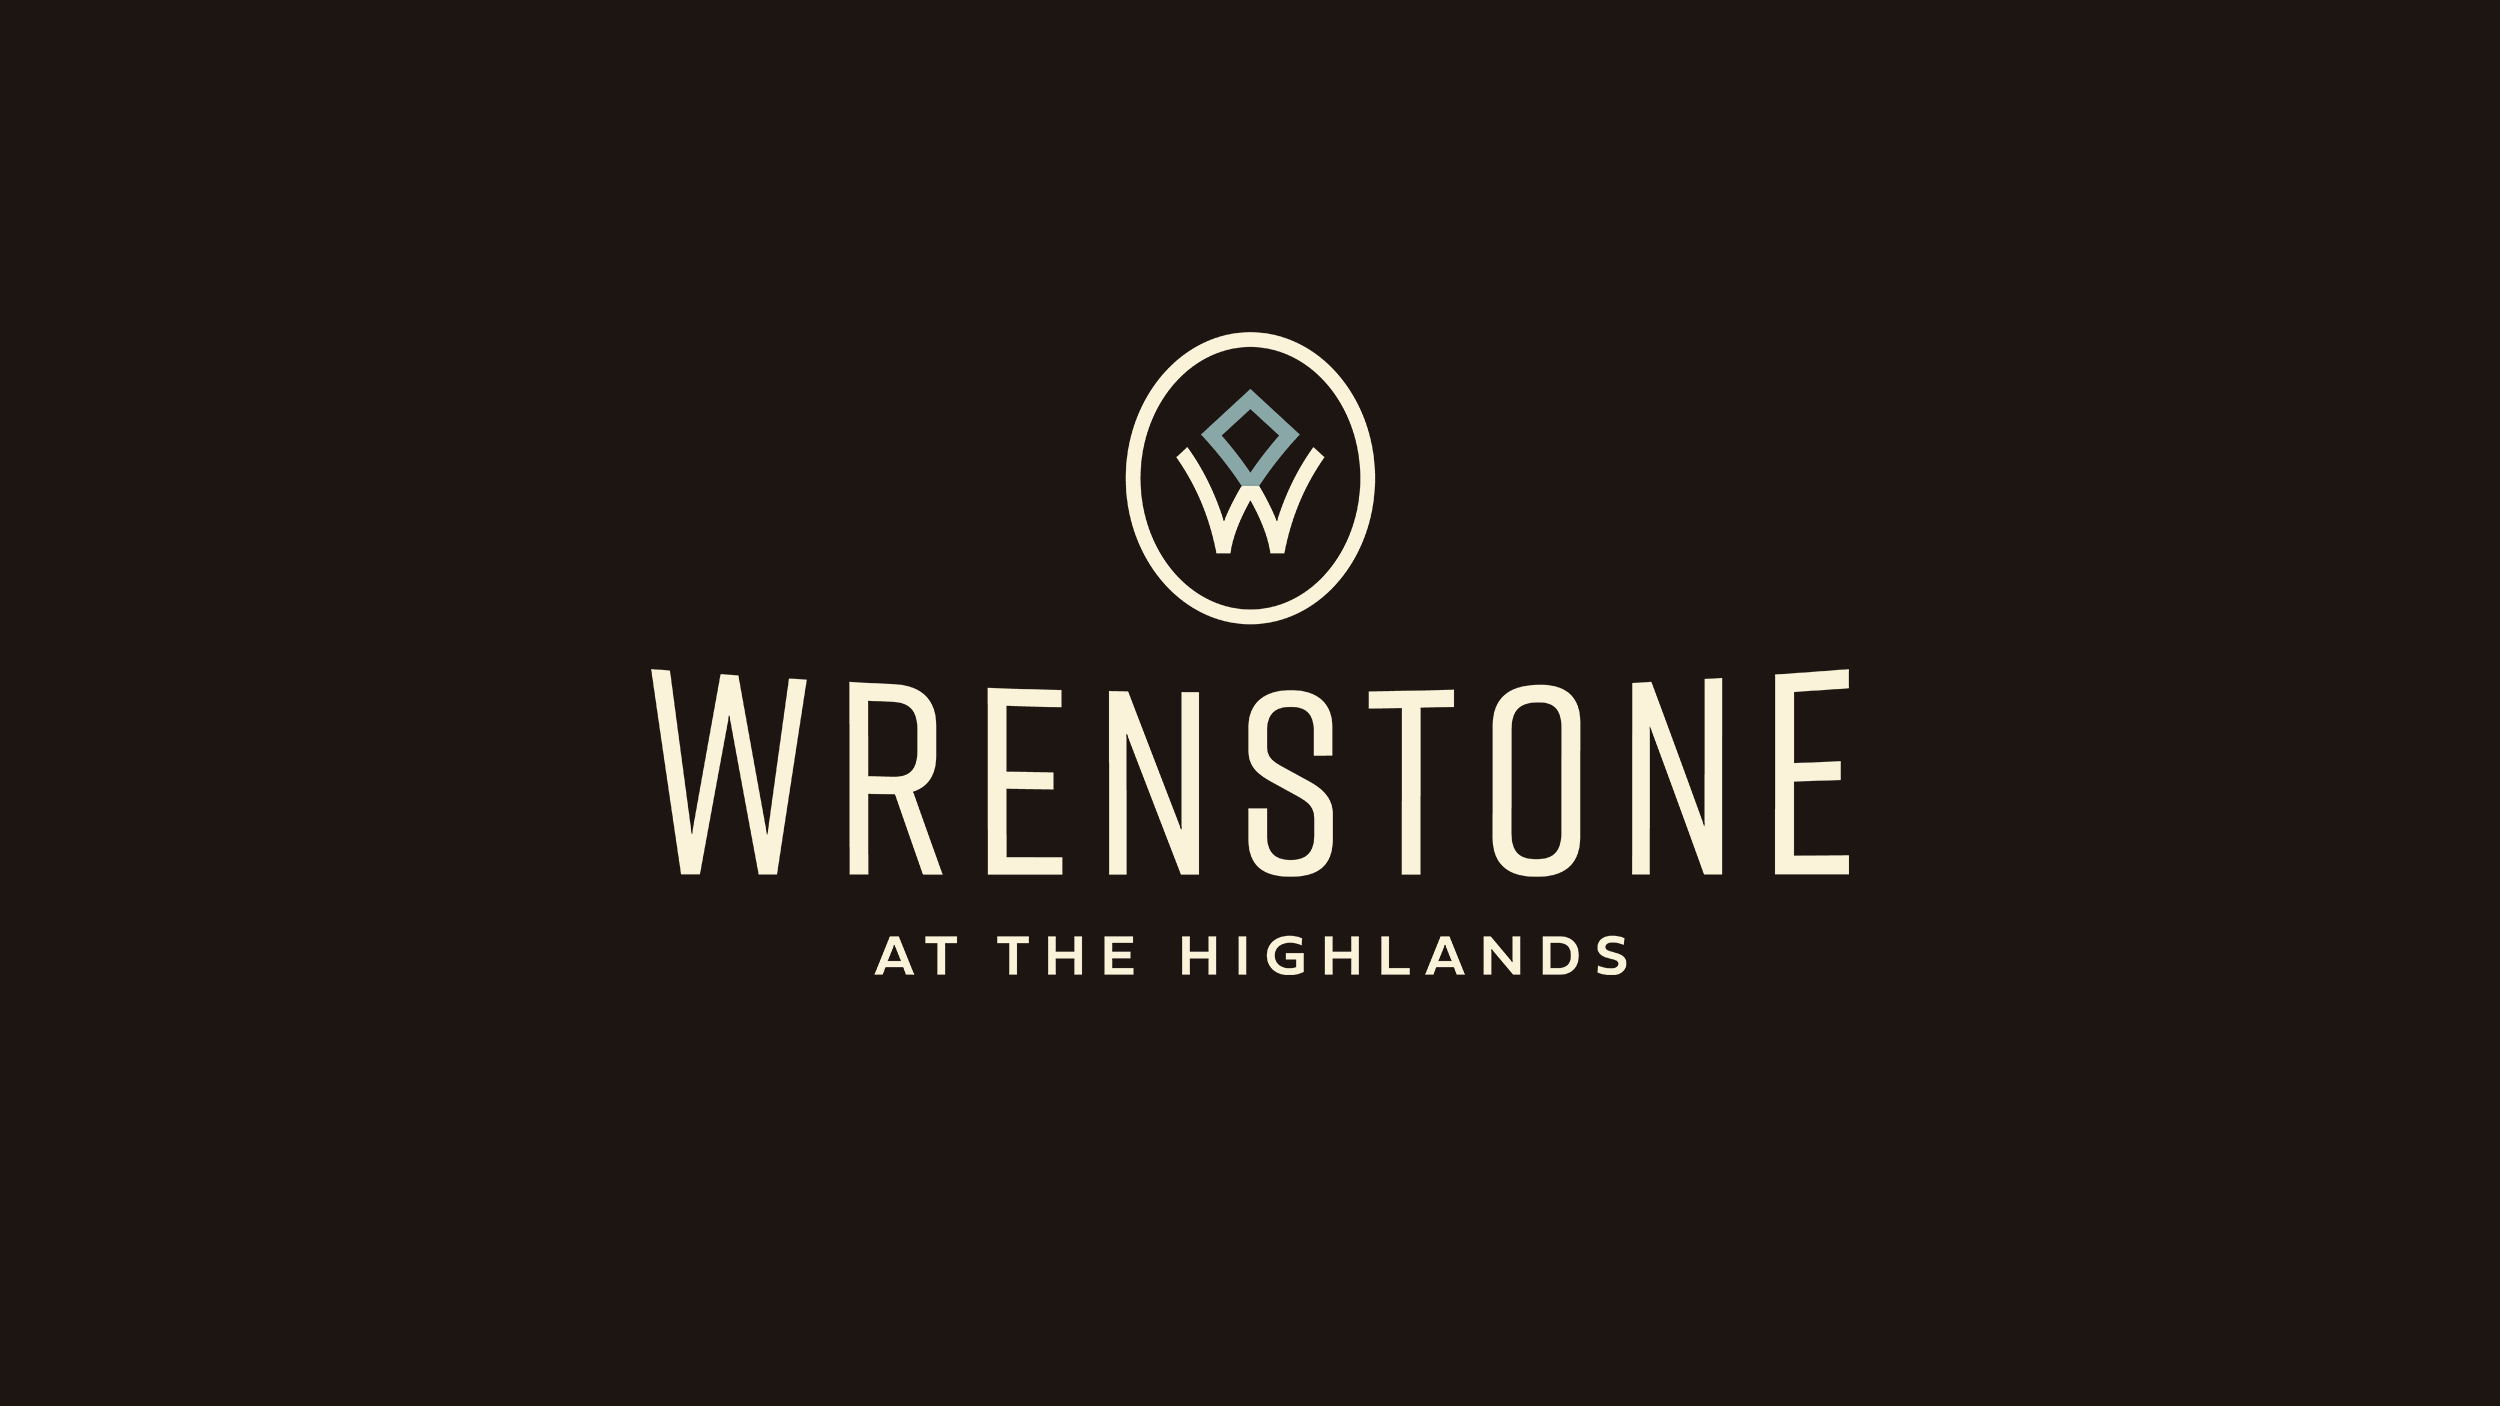 cream Wrenstone at the Highlands logo on a black background